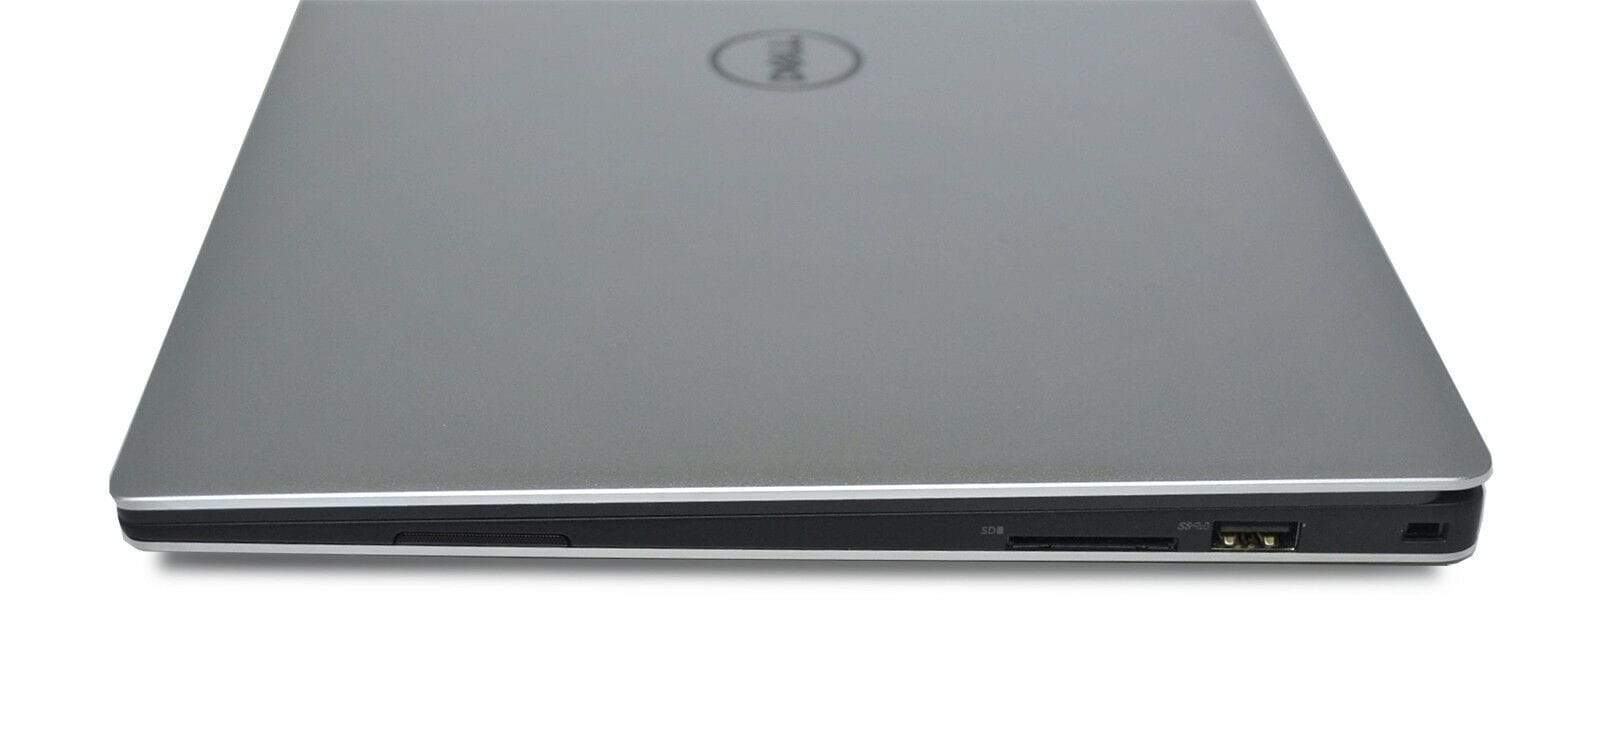 Dell XPS 13 9360 QHD+ UltraBook: Core i7-7500U, 256GB, 8GB RAM, VAT, 1.2KG - CruiseTech